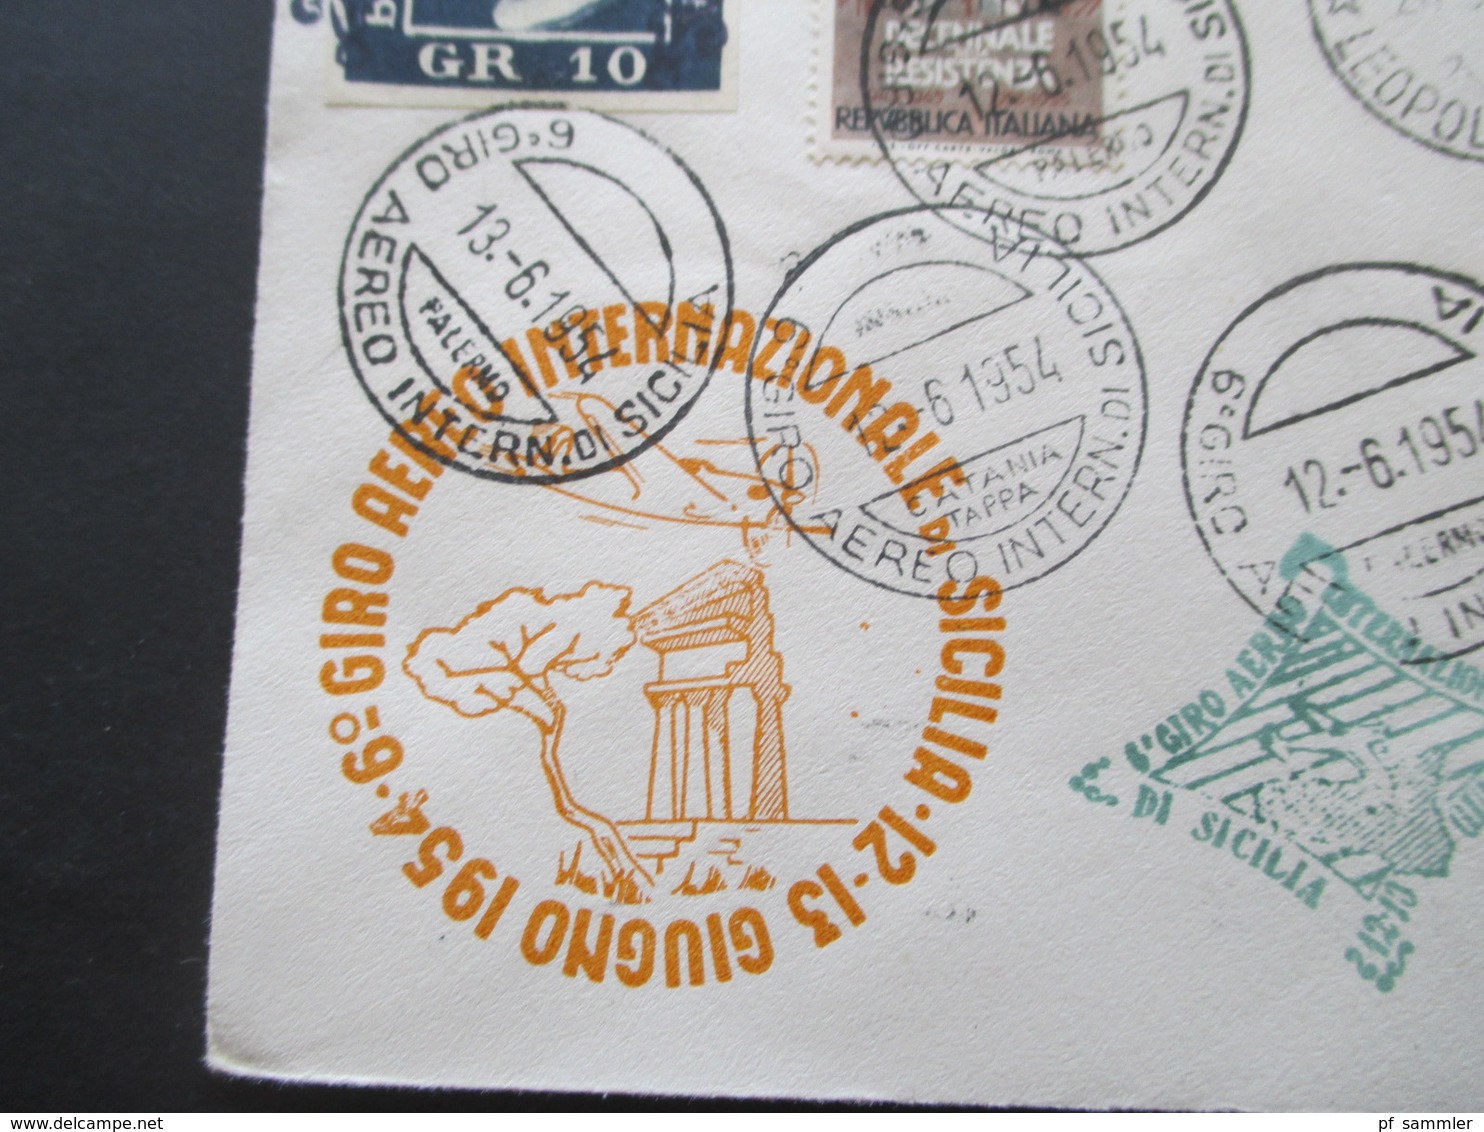 Italien / Belgisch Congo 1954 Luftpost / Aeroclub Palermo / Giro Aereo Intern Di Sicilia Mit Original Unterschrift Pilot - Airmail